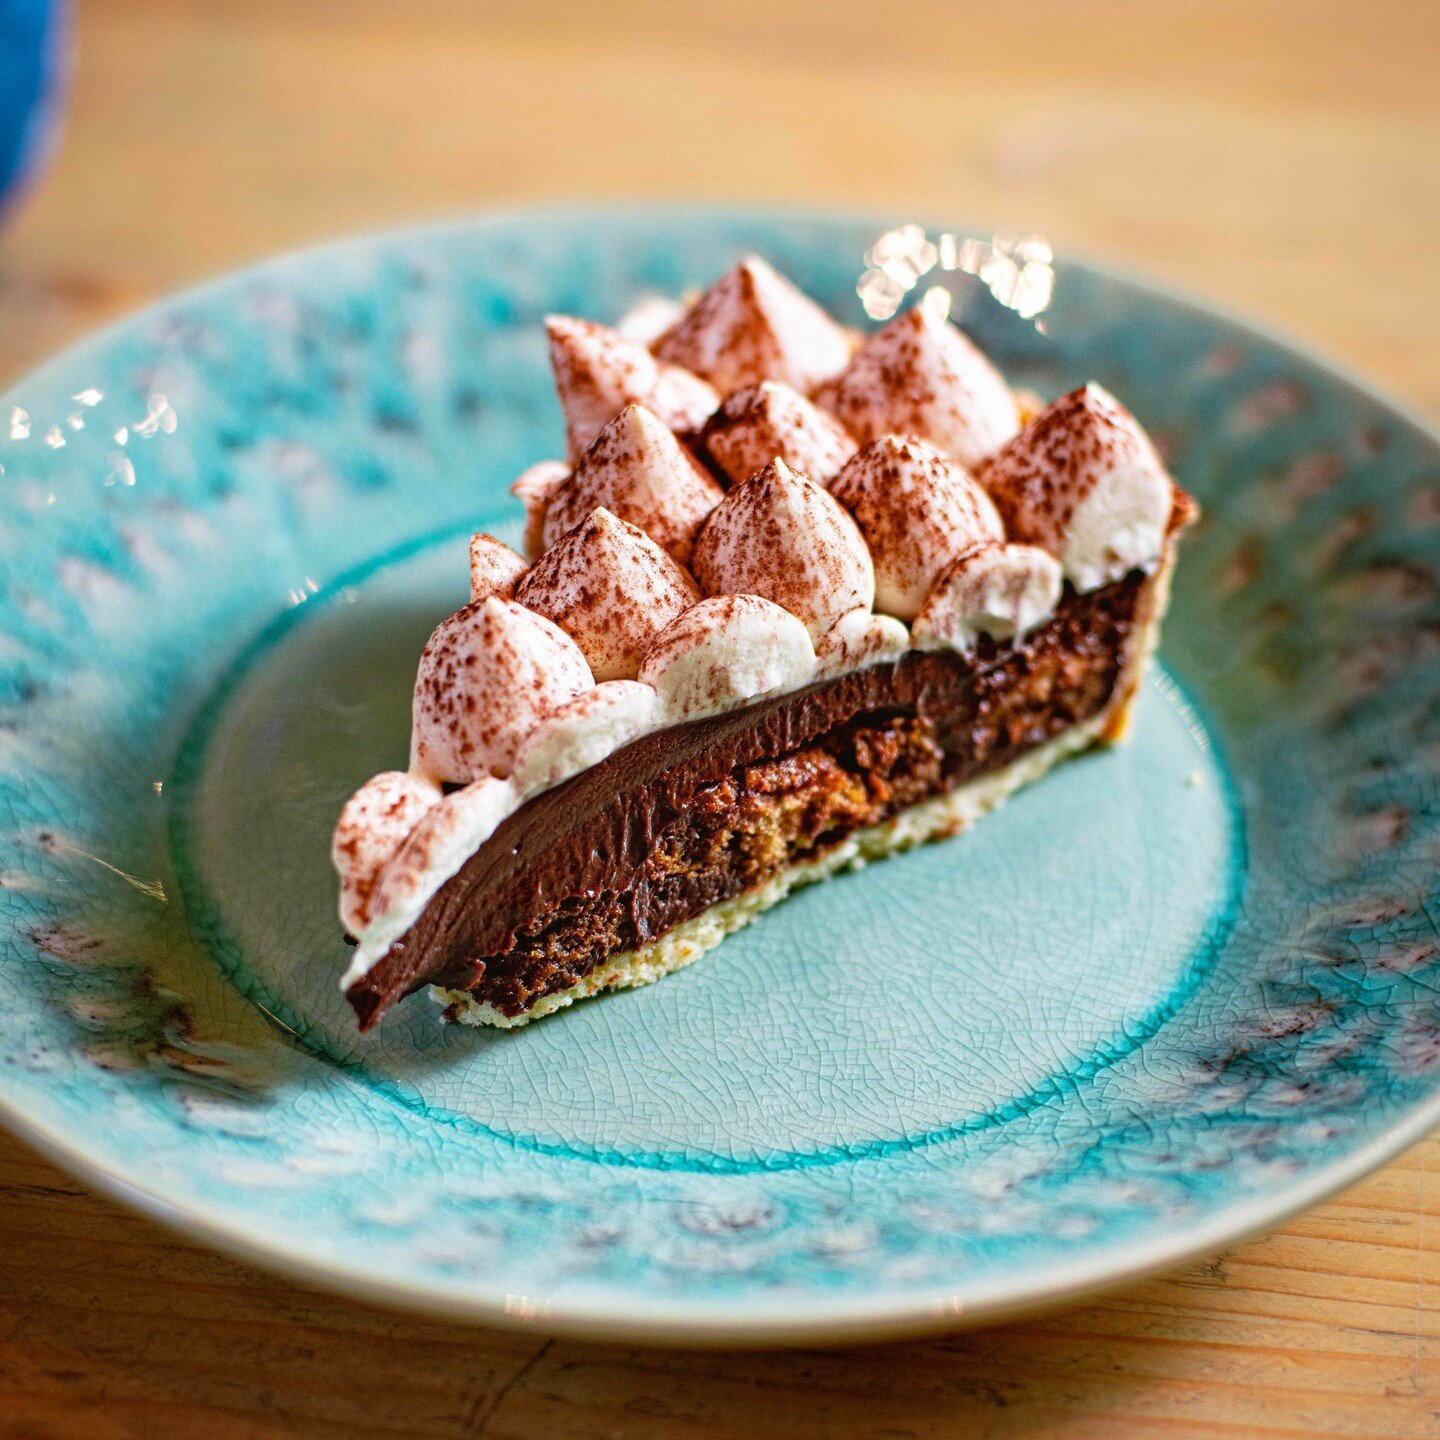 Chocolate and coffee tart

#sweettreat #dessert #chocolatelover #coffeedessert #chocolatetart